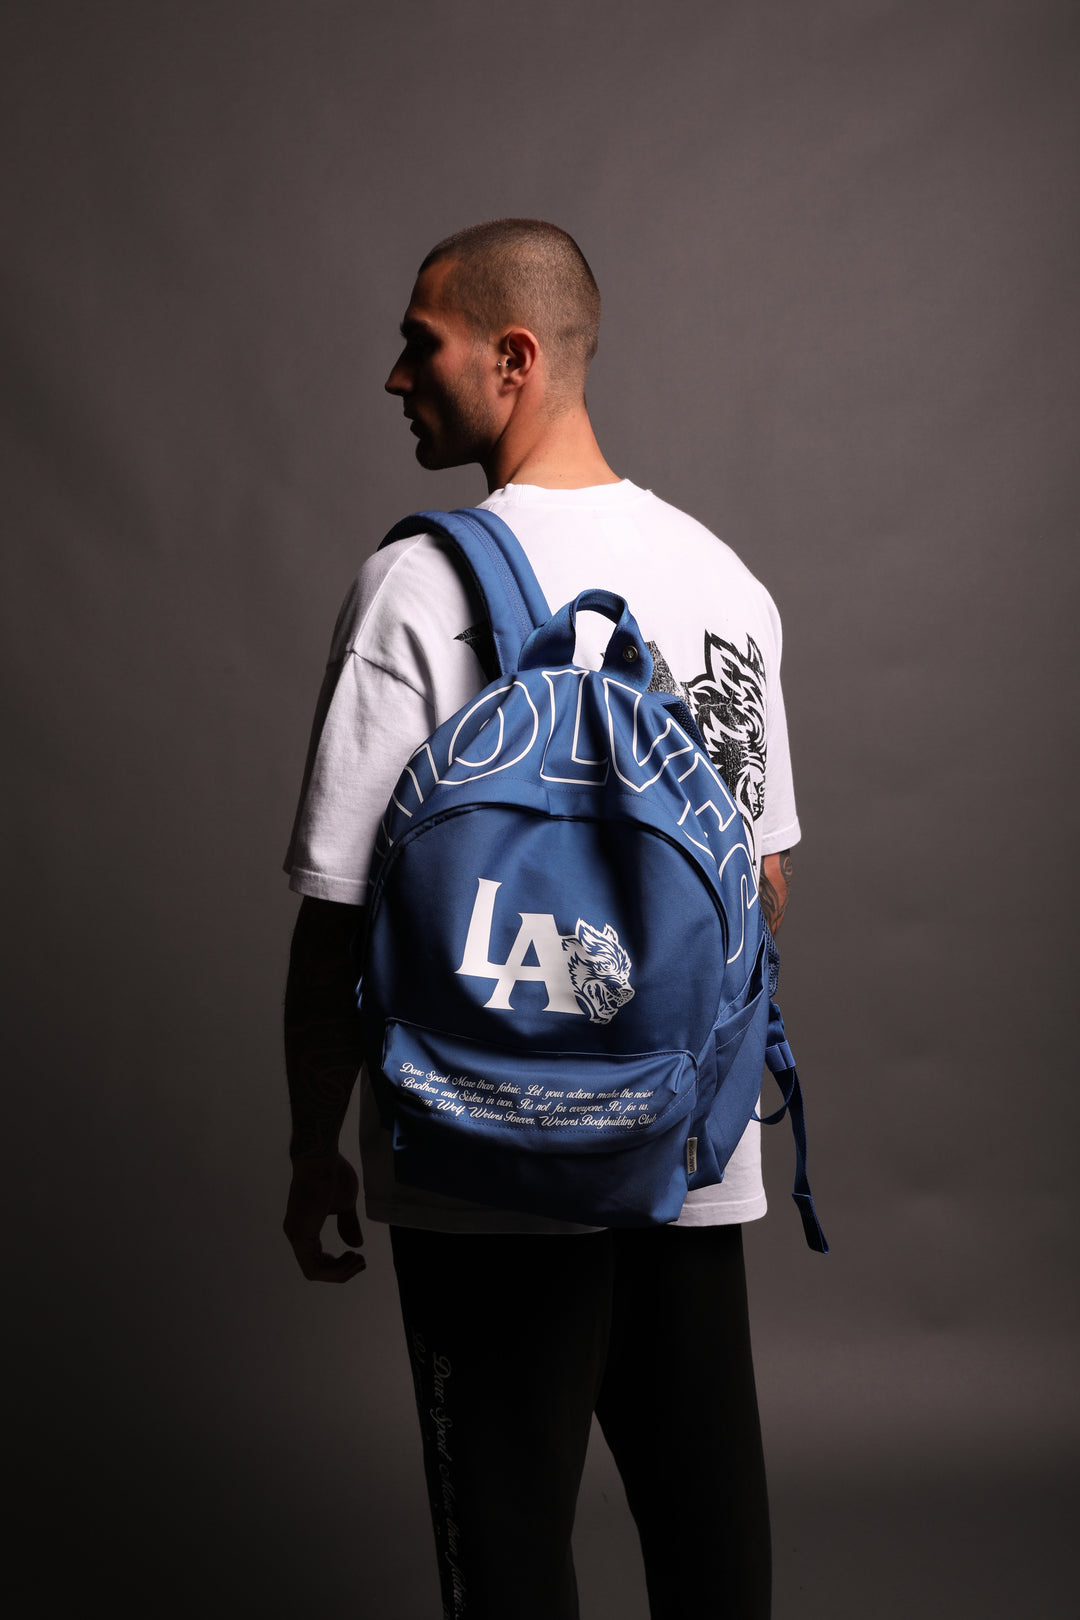 Los Angeles Everyday Backpack in LA Blue